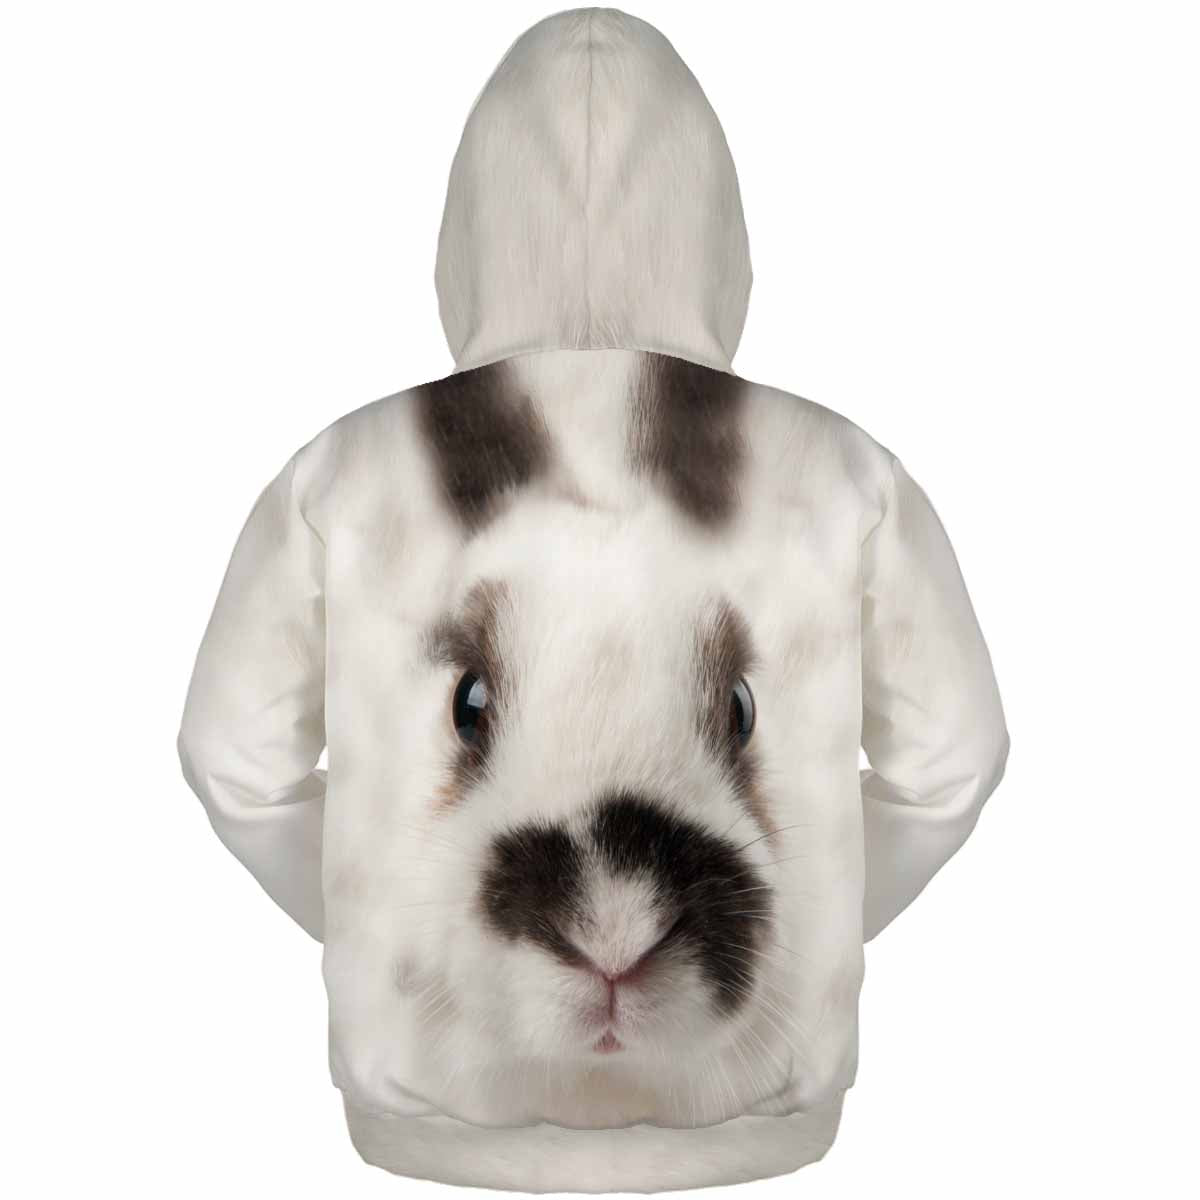 Rabbit Hoodie Pullover 3D Print Sweatshirts